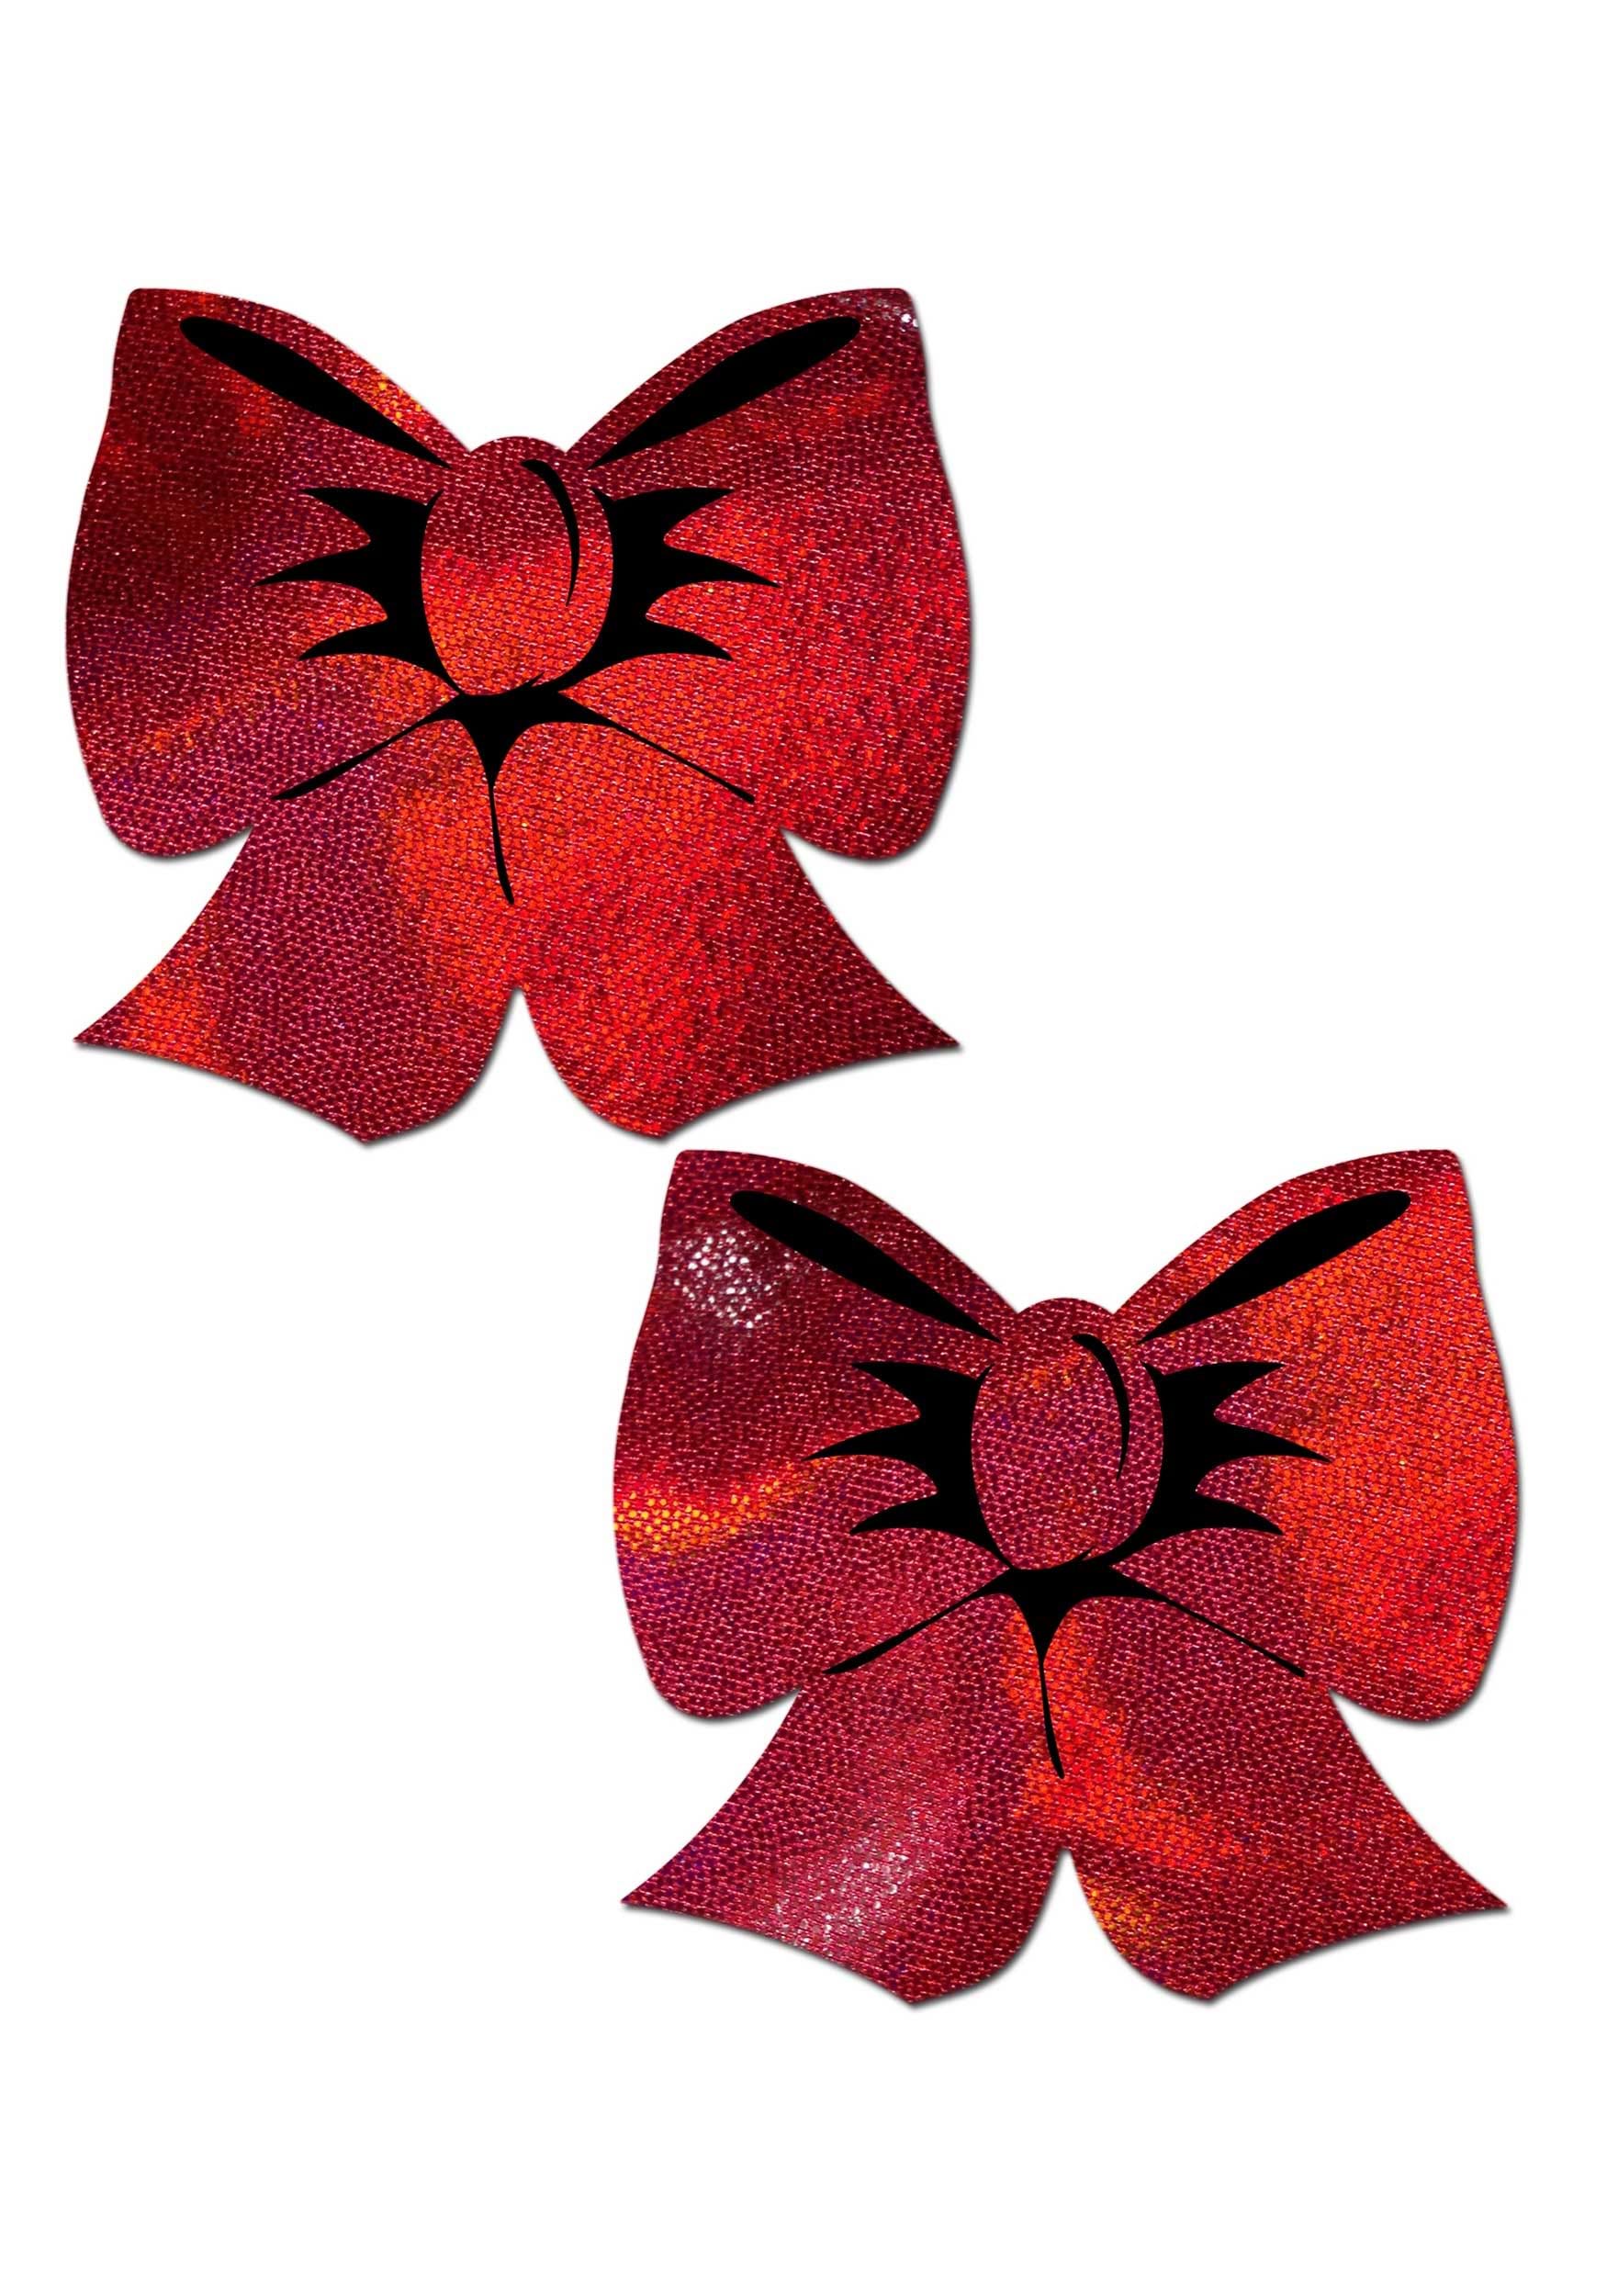 Holográfica Red Bows Pasties de Pastease Multicolor Colombia